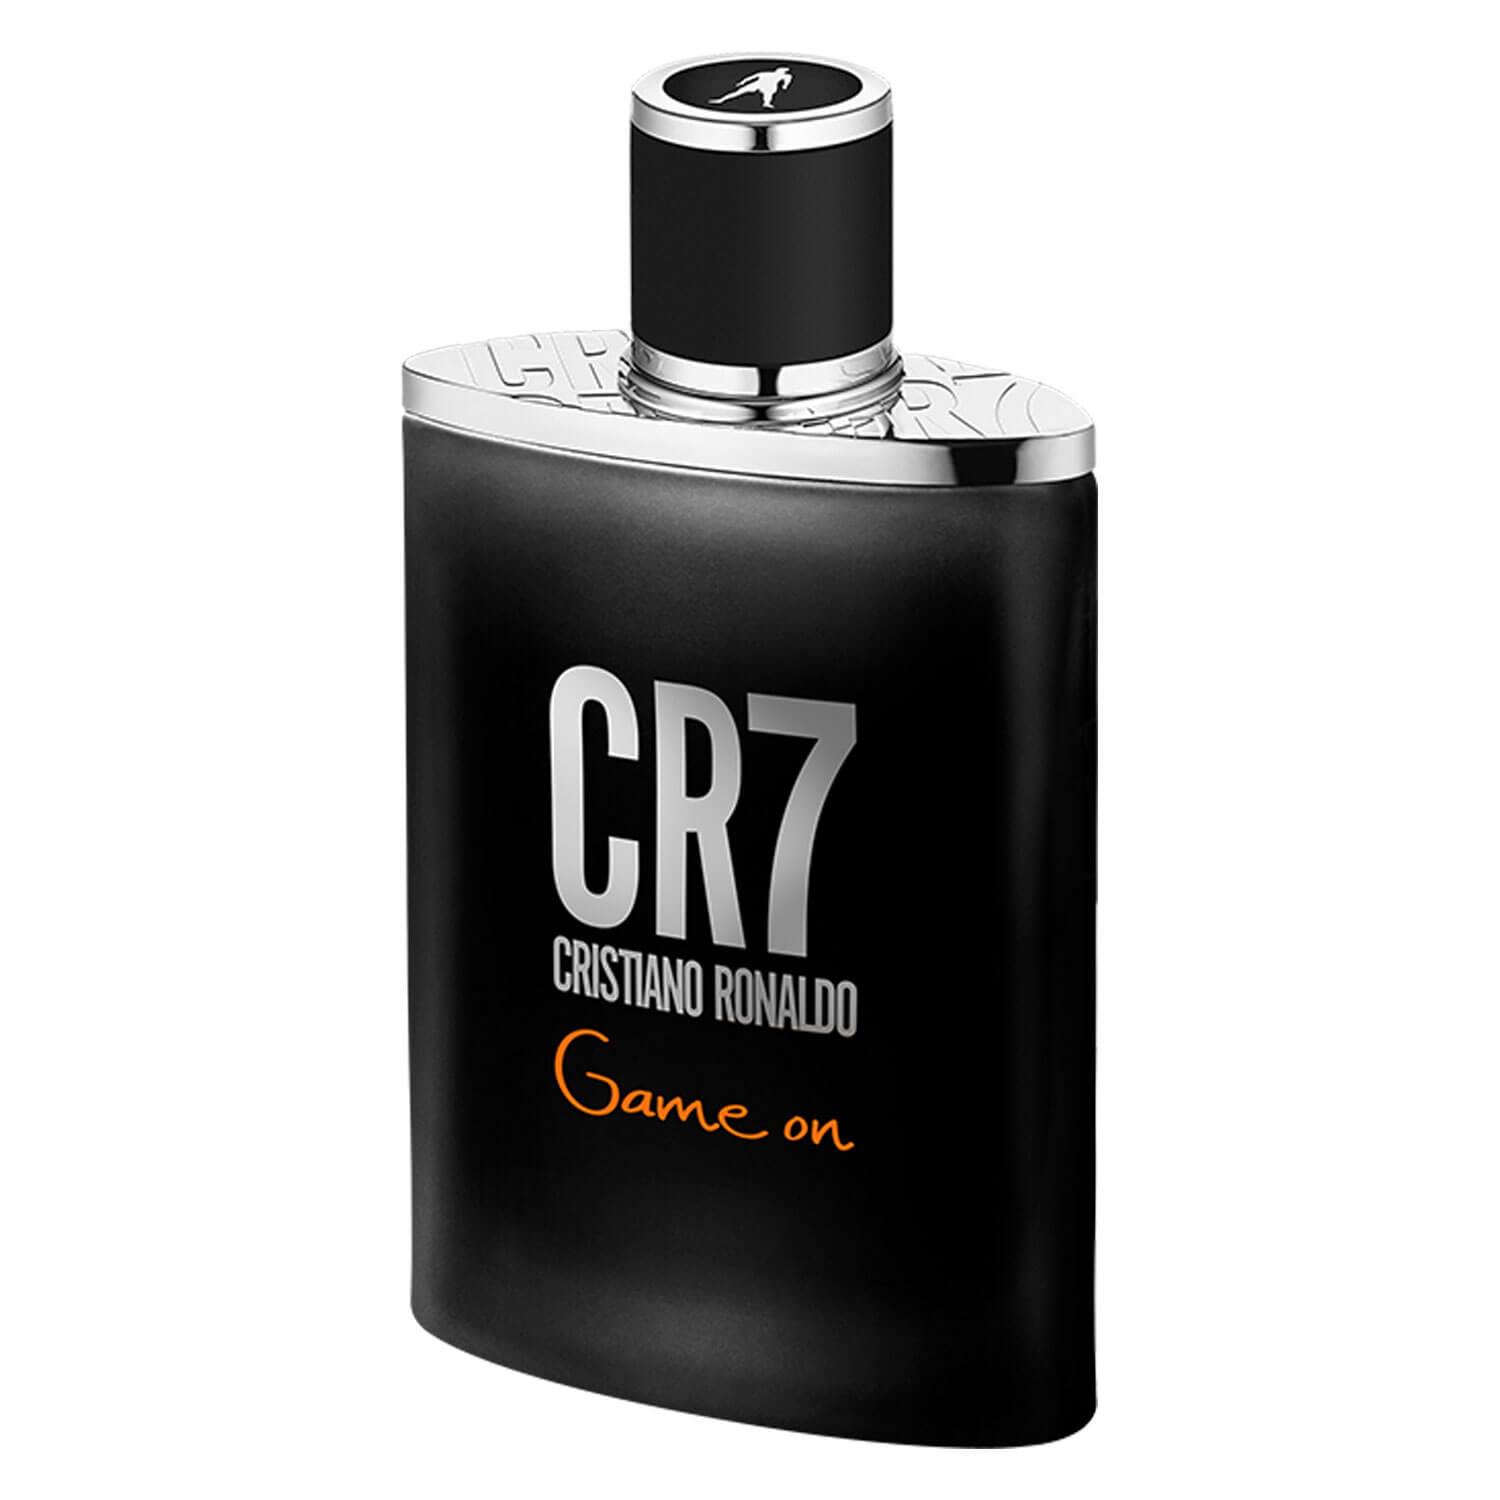 CR7 Cristiano Ronaldo - Game On Eau de Toilette